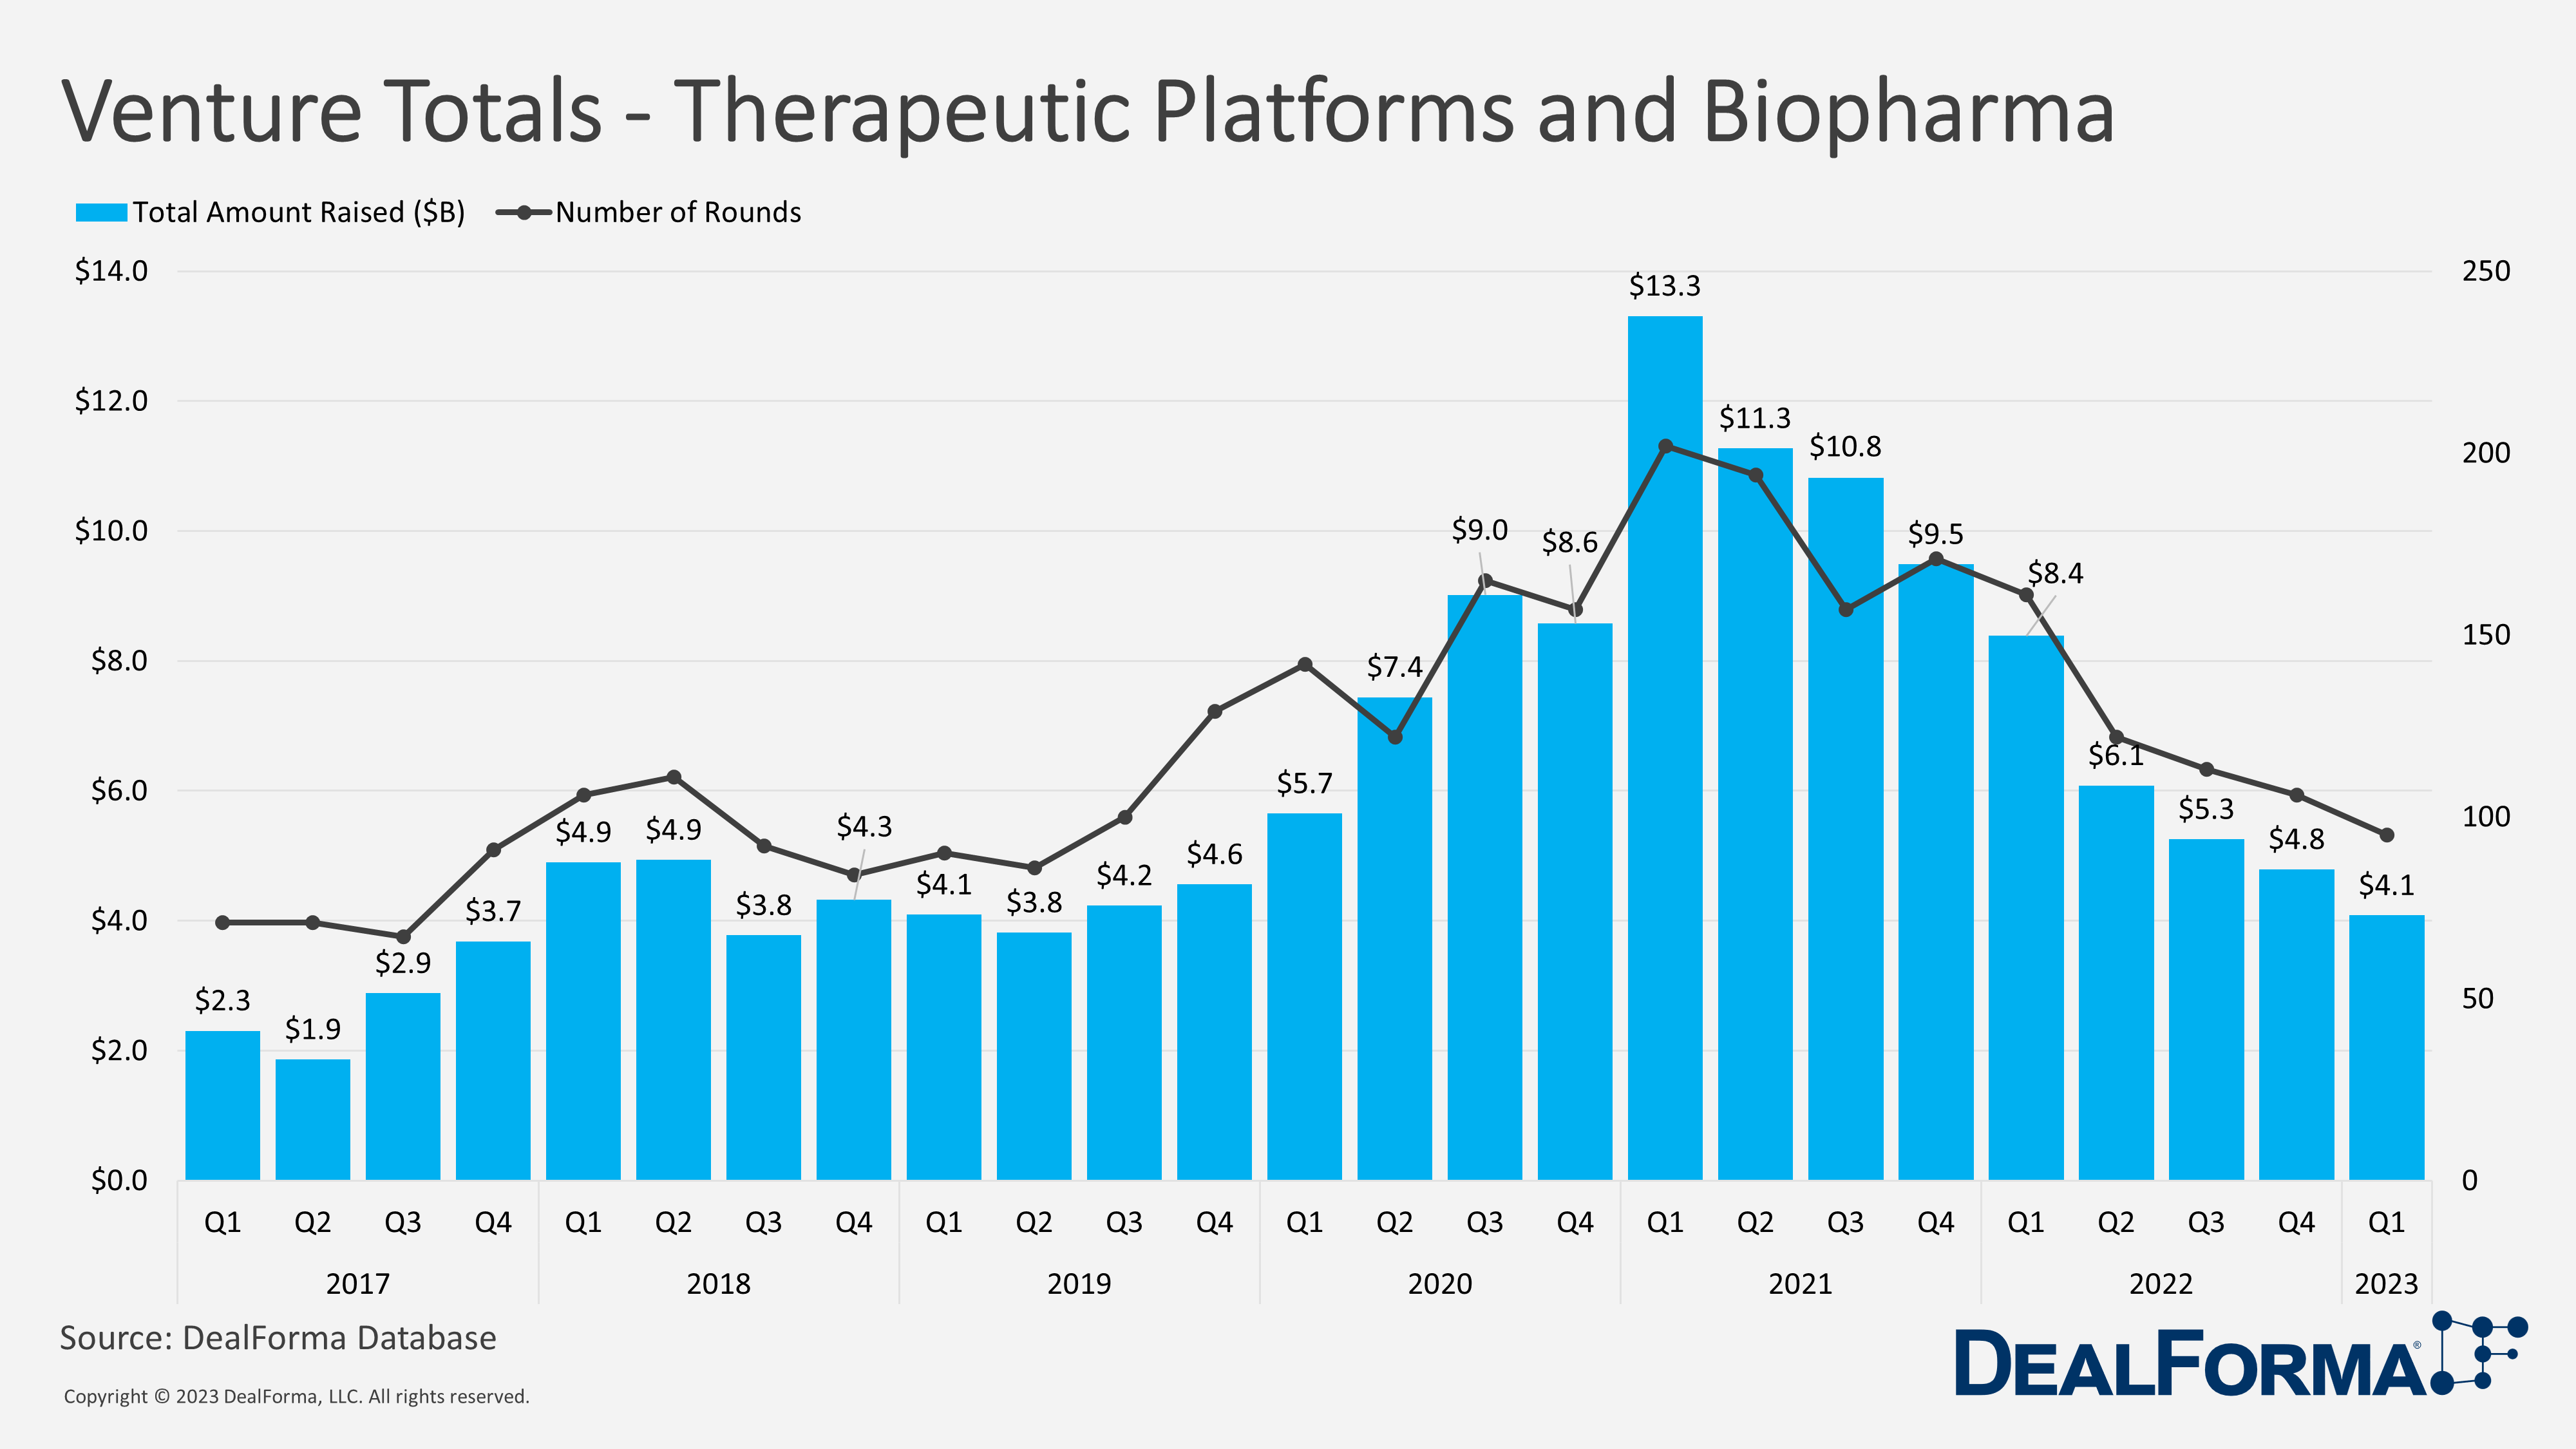 Venture Totals - Therapeutic Platforms and Biopharma